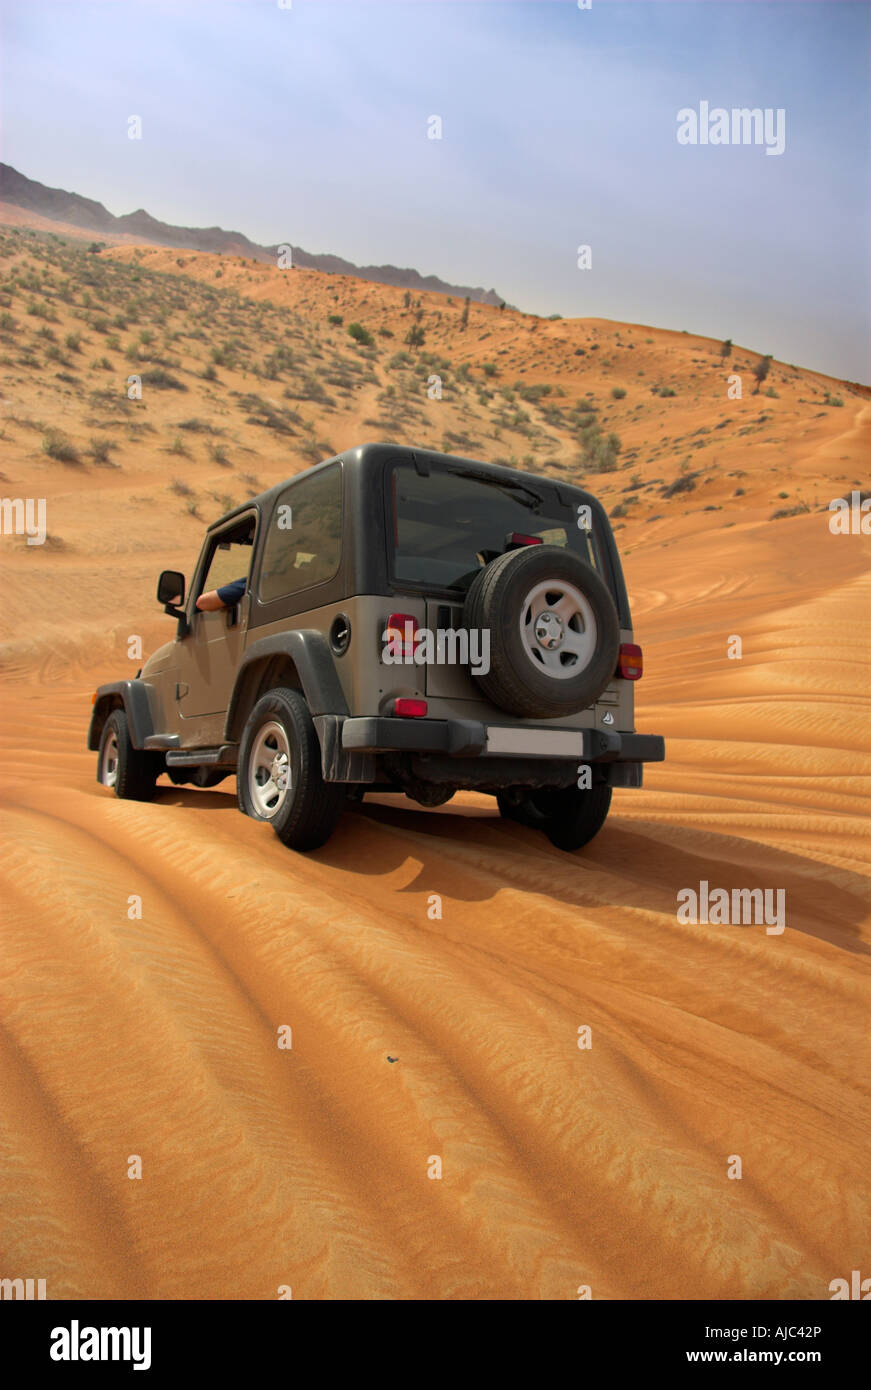 Green 4x4 Driving over Dunes in the Desert Stock Photo